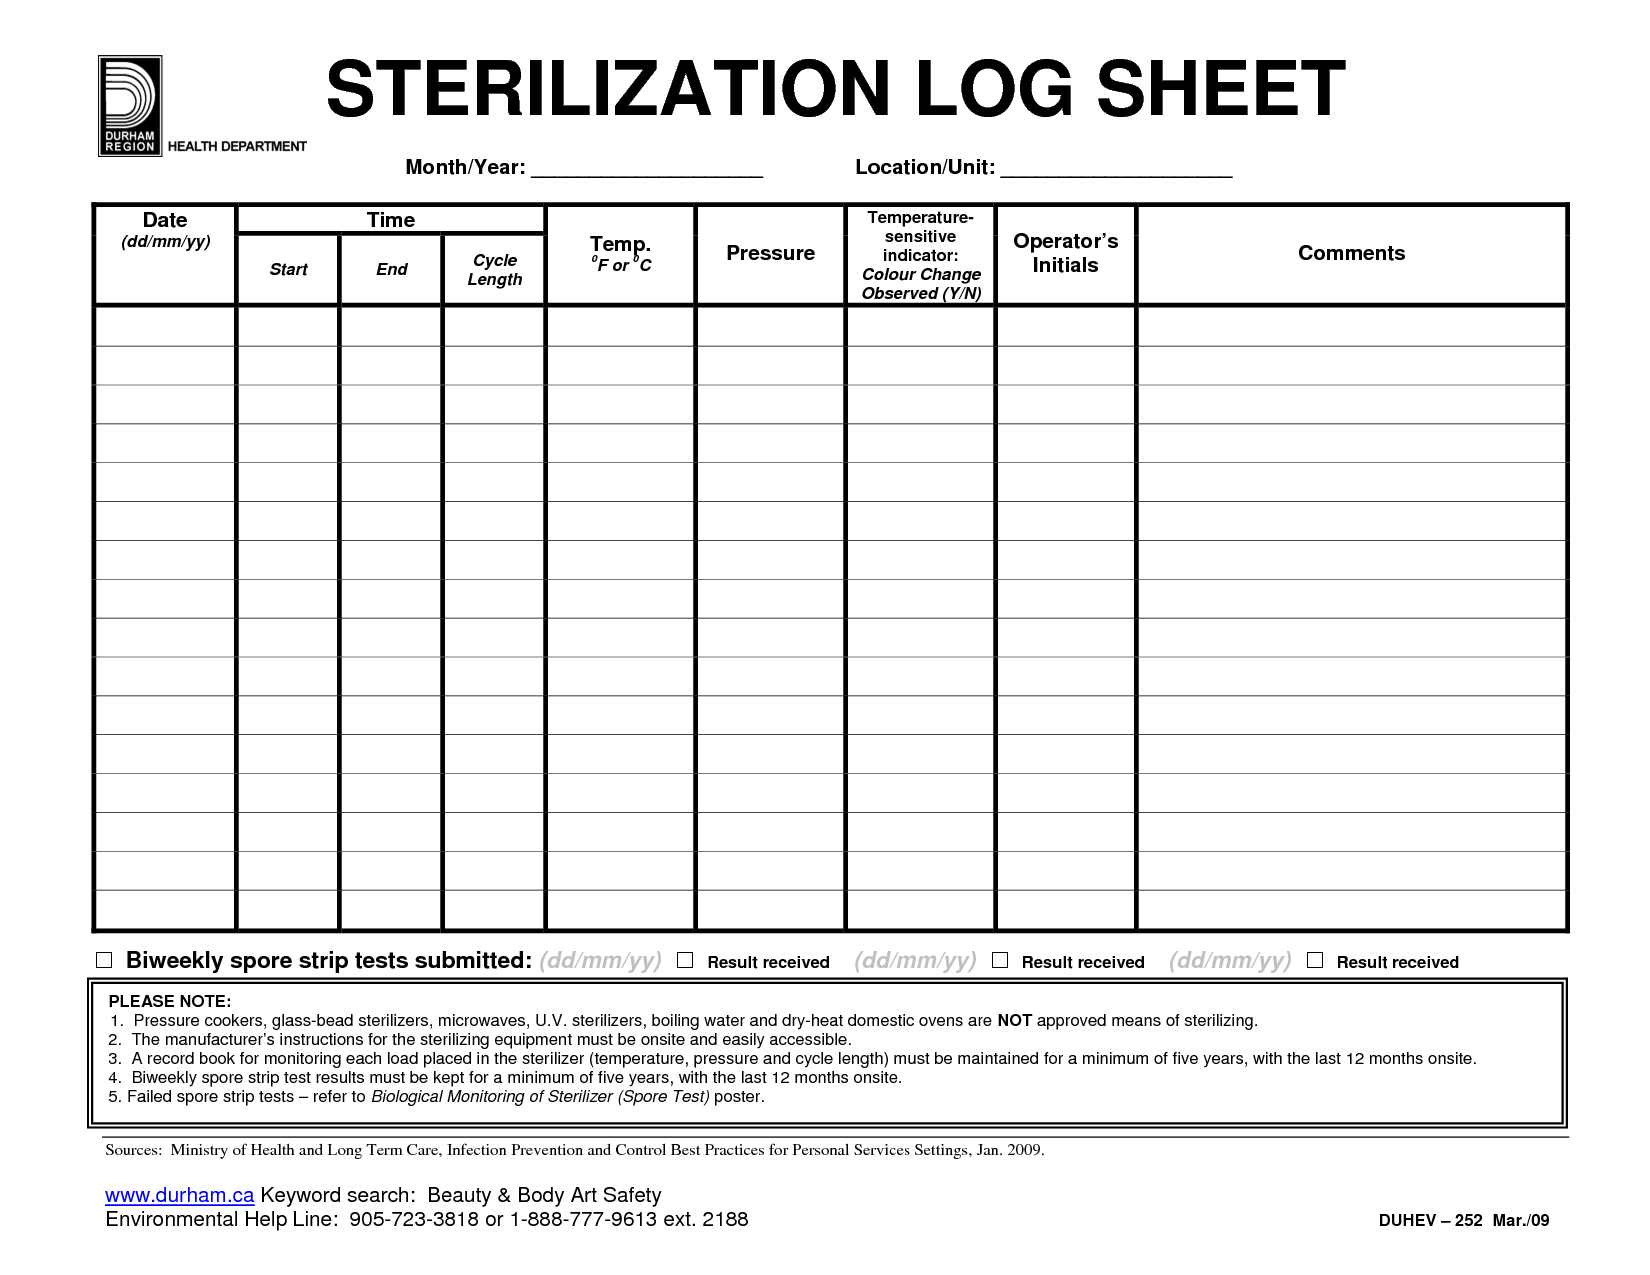 Autoclave Sterilization Log Sheet Image